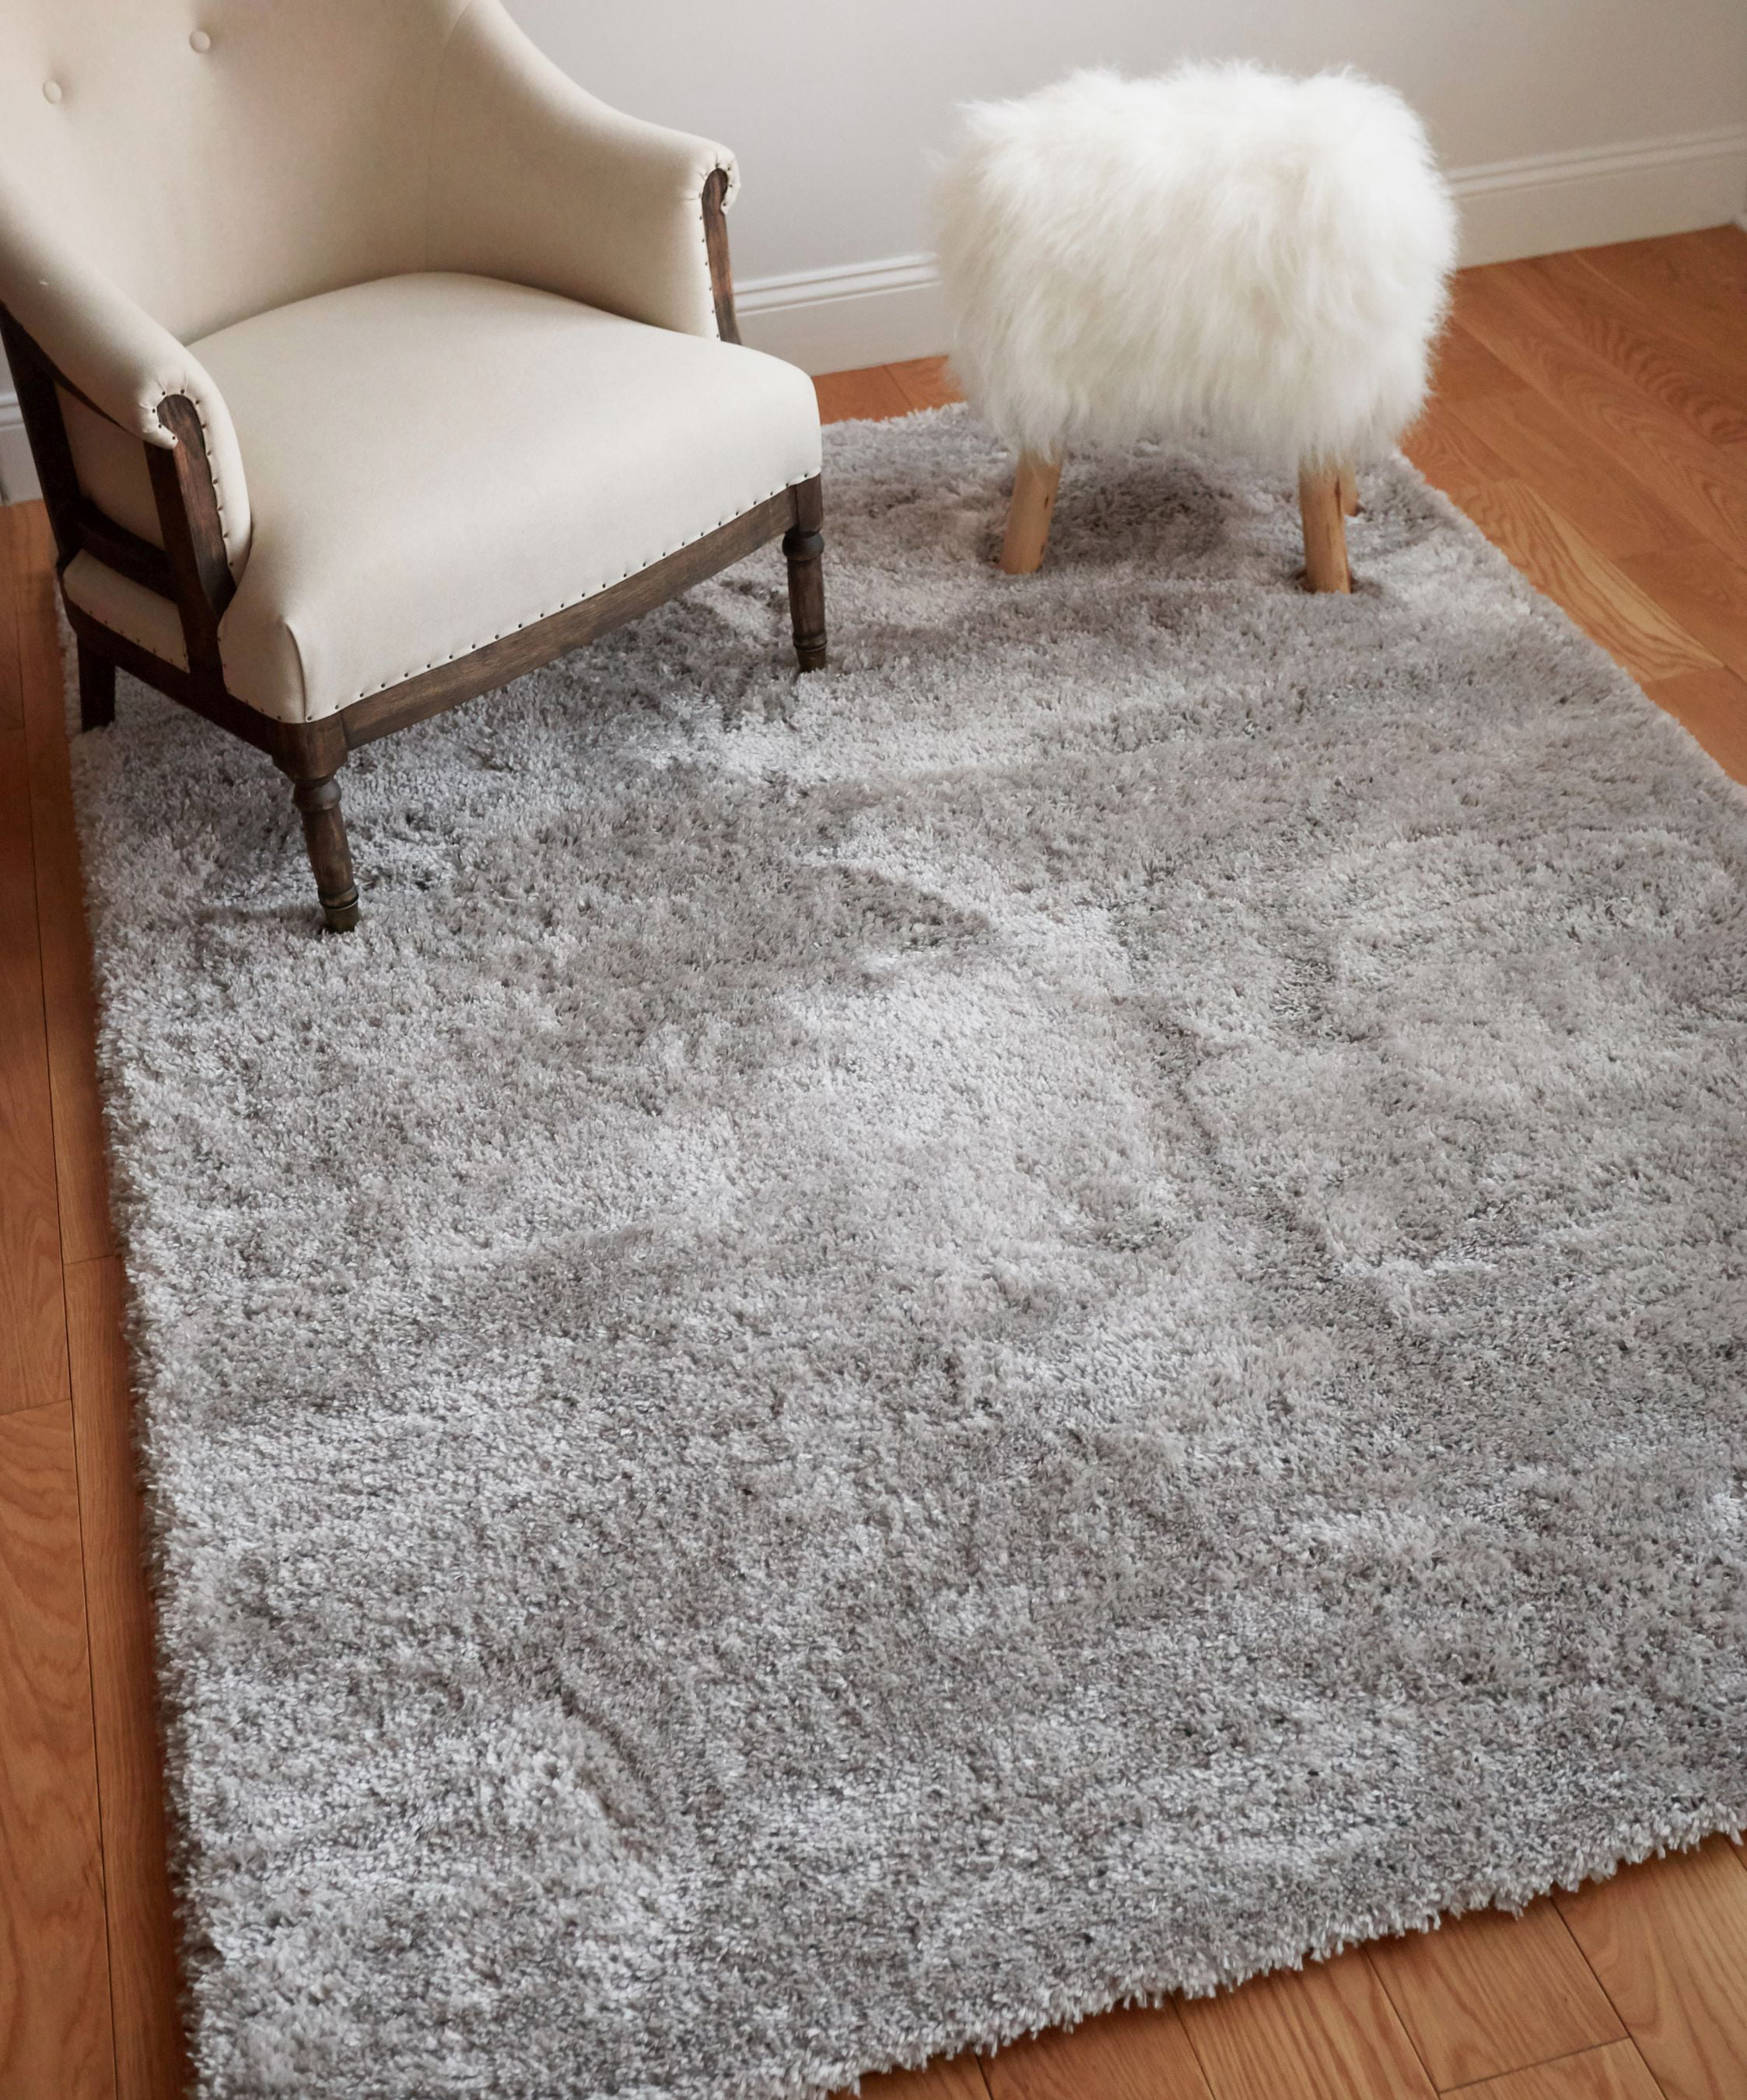 HSJT Carpet Shaggy Rug Rectangle Modern Area Fluffy Rugs Soft Faux Fur For Bedroom Living Room Nursery-Light blue-50×80cm 